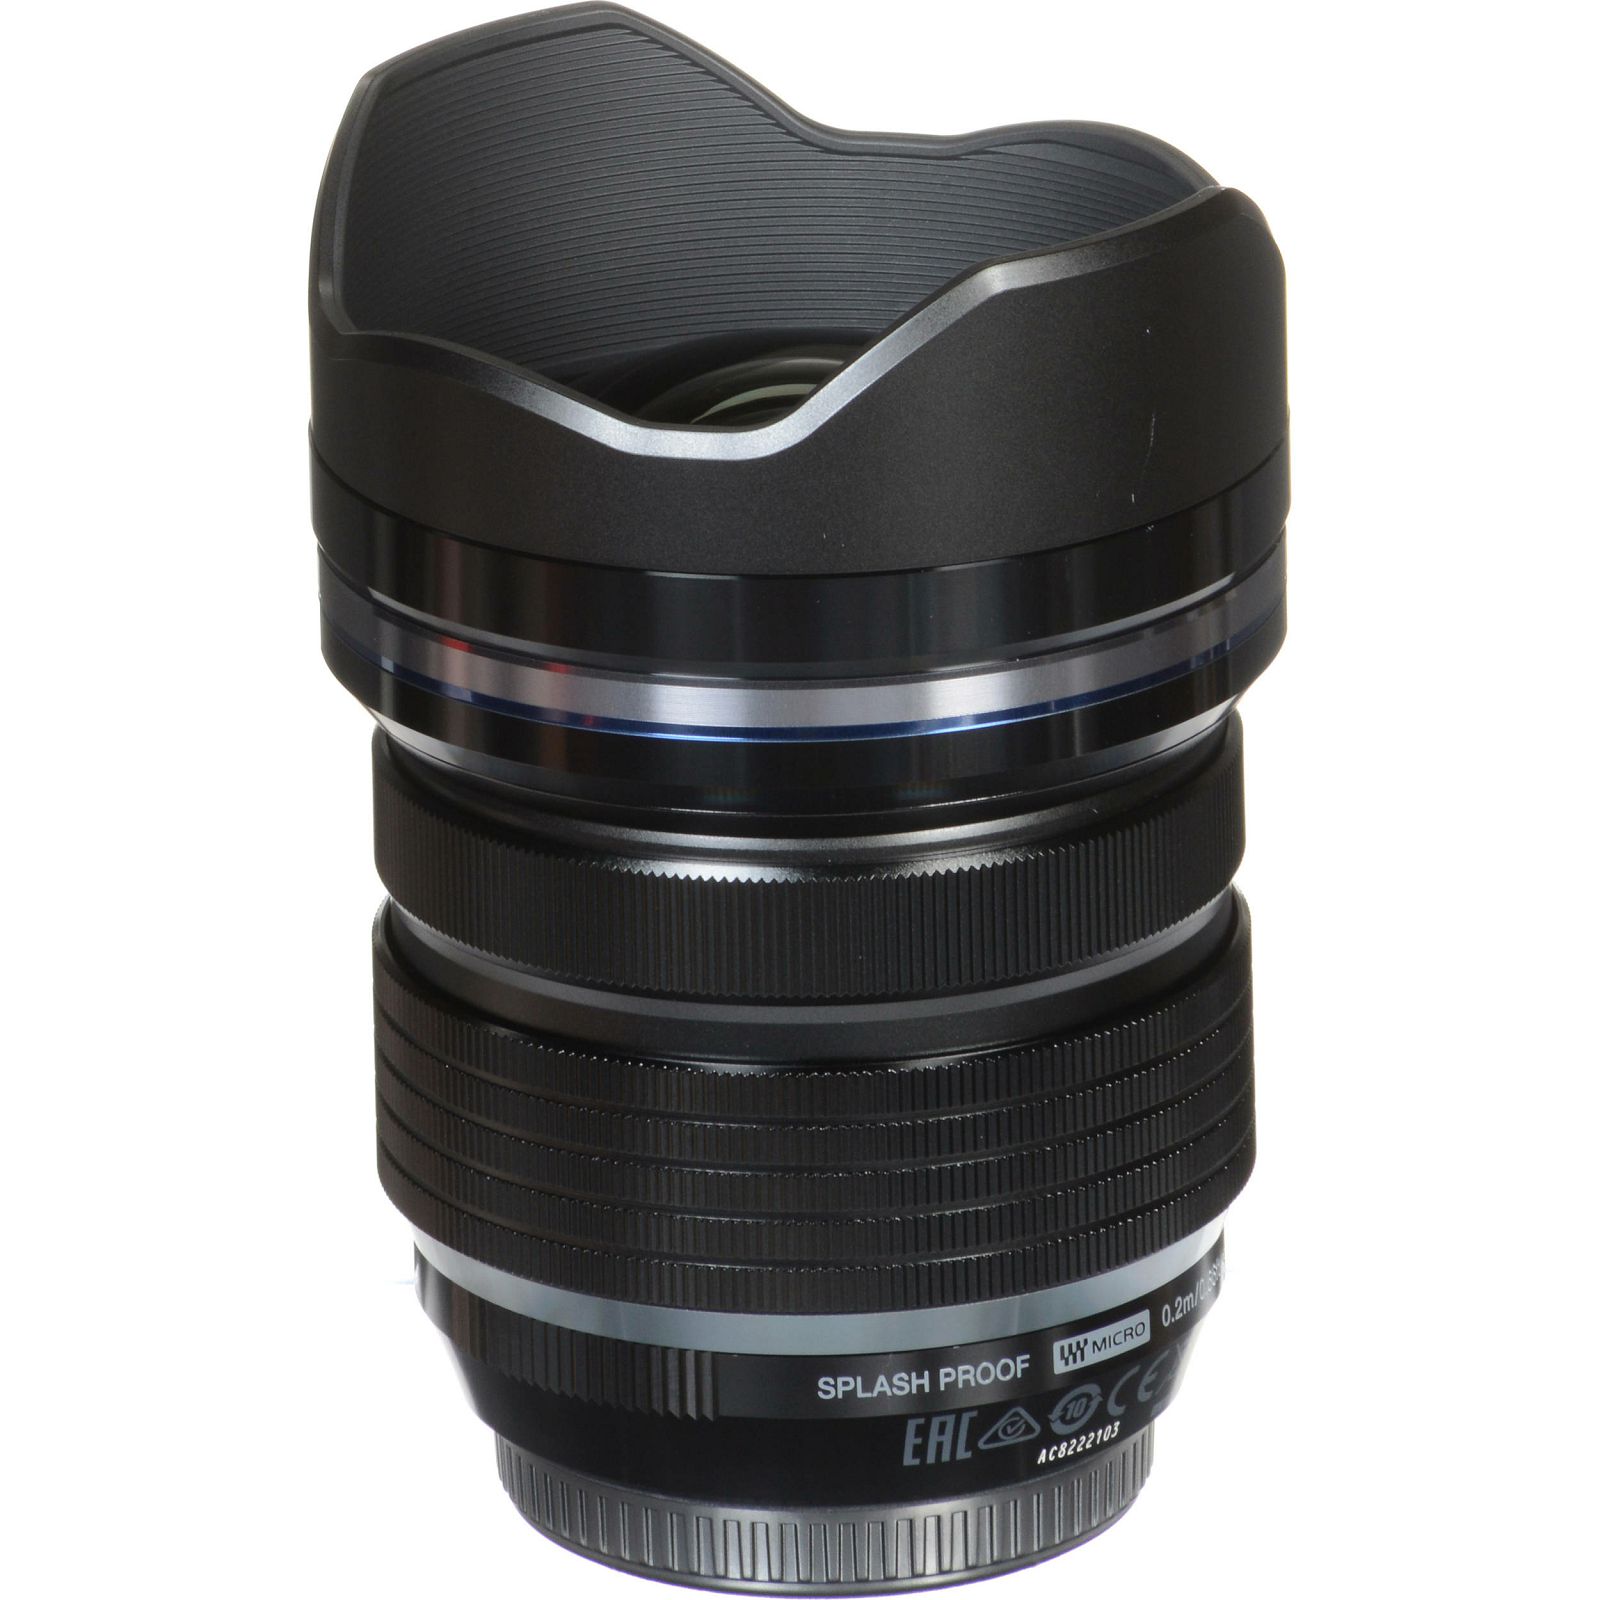 Olympus M. Zuiko Digital 7-14mm f/2.8 ED PRO širokokutni objektiv 7-14 1:2.8 f2.8 2.8 wide angle zoom lens Micro Four Thirds MFT micro4/3" (V313020BW000)